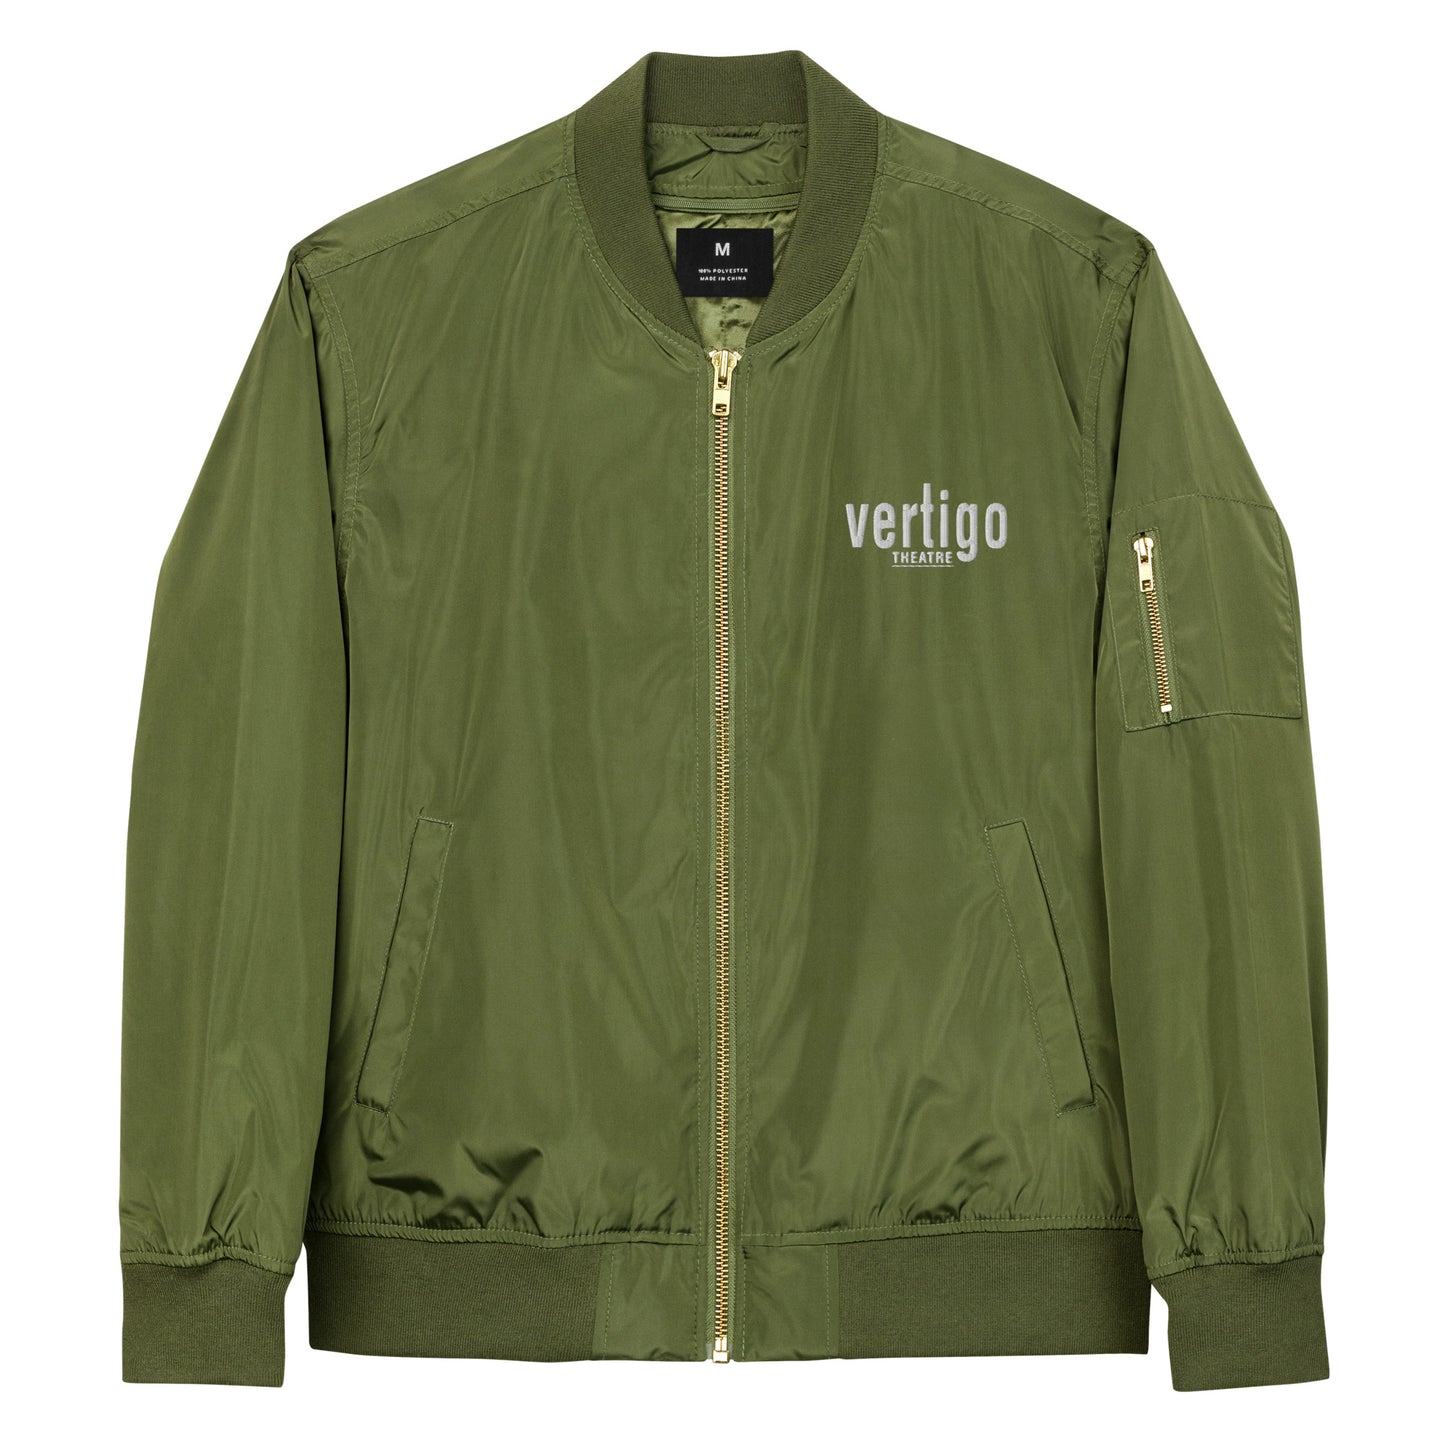 Vertigo Branded Bomber Jacket (Recycled Materials)